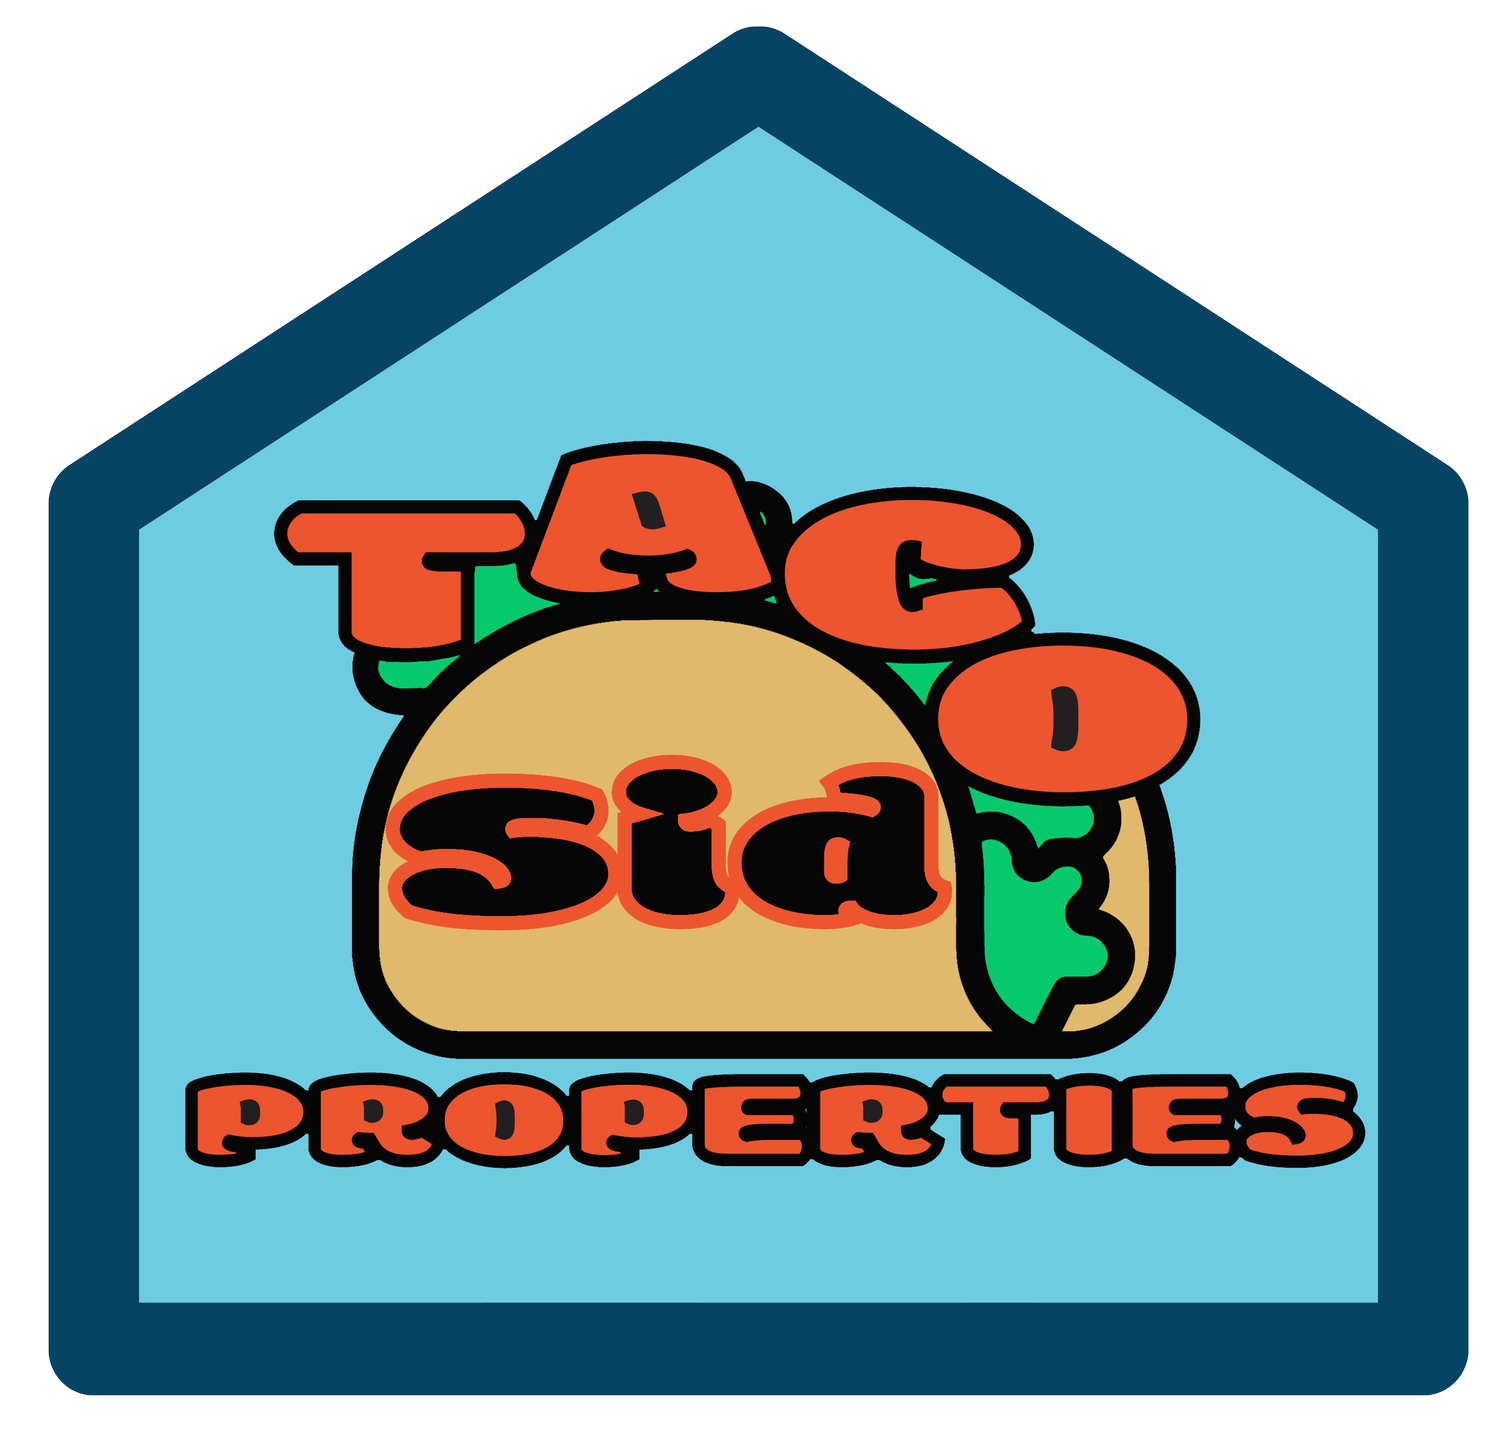 TacoSid Properties